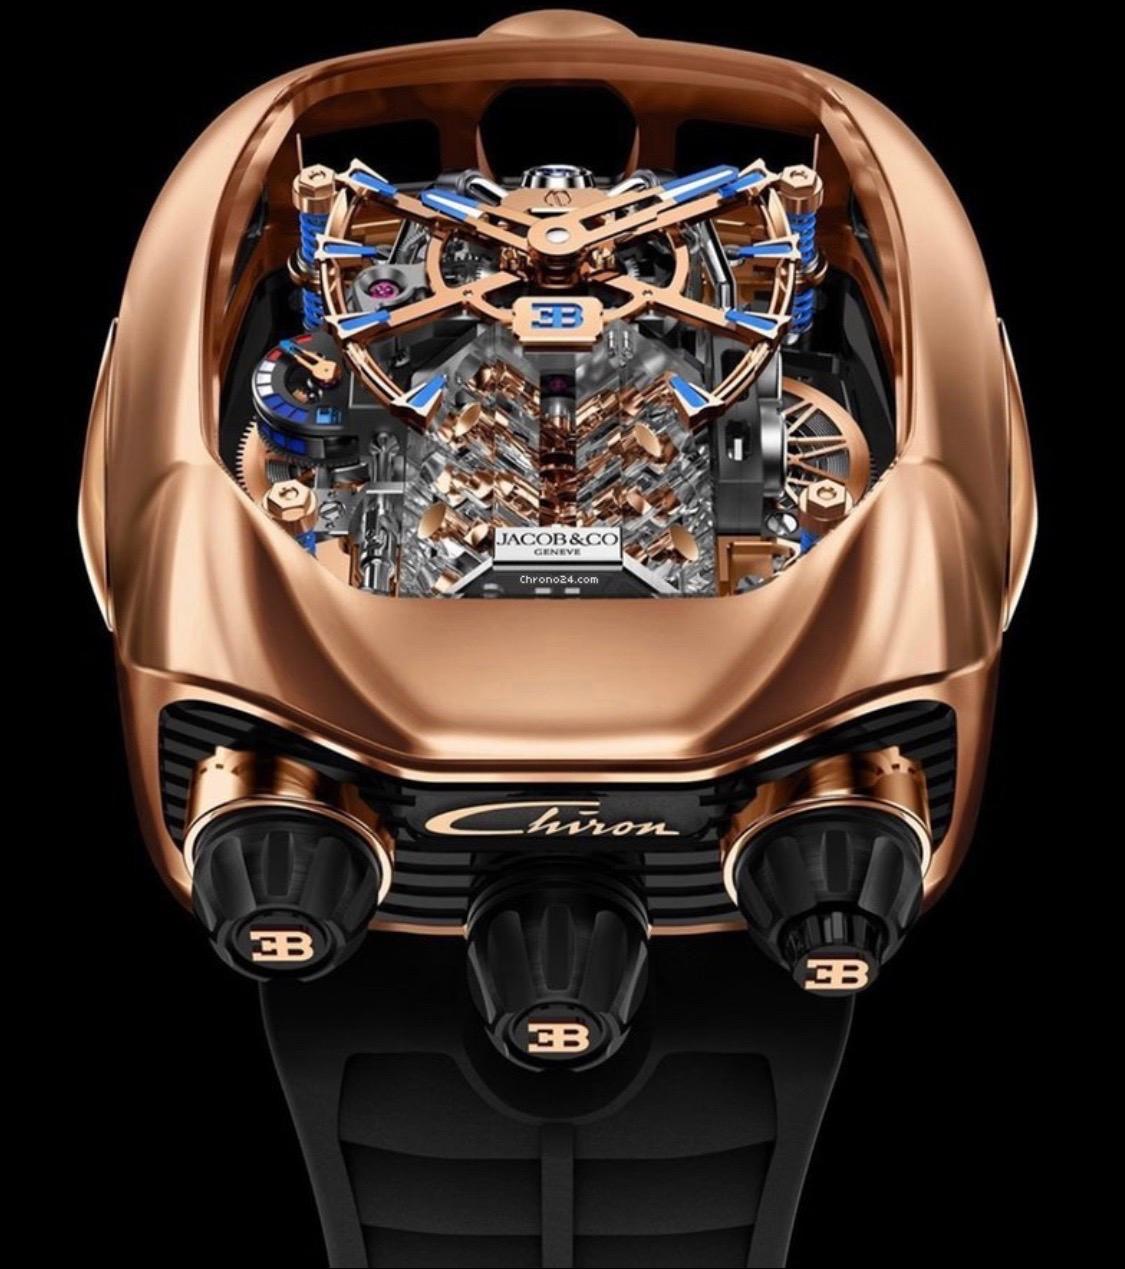 Jacob & co Bugatti Chiron 16 Zylinder tourbillion, rose gold